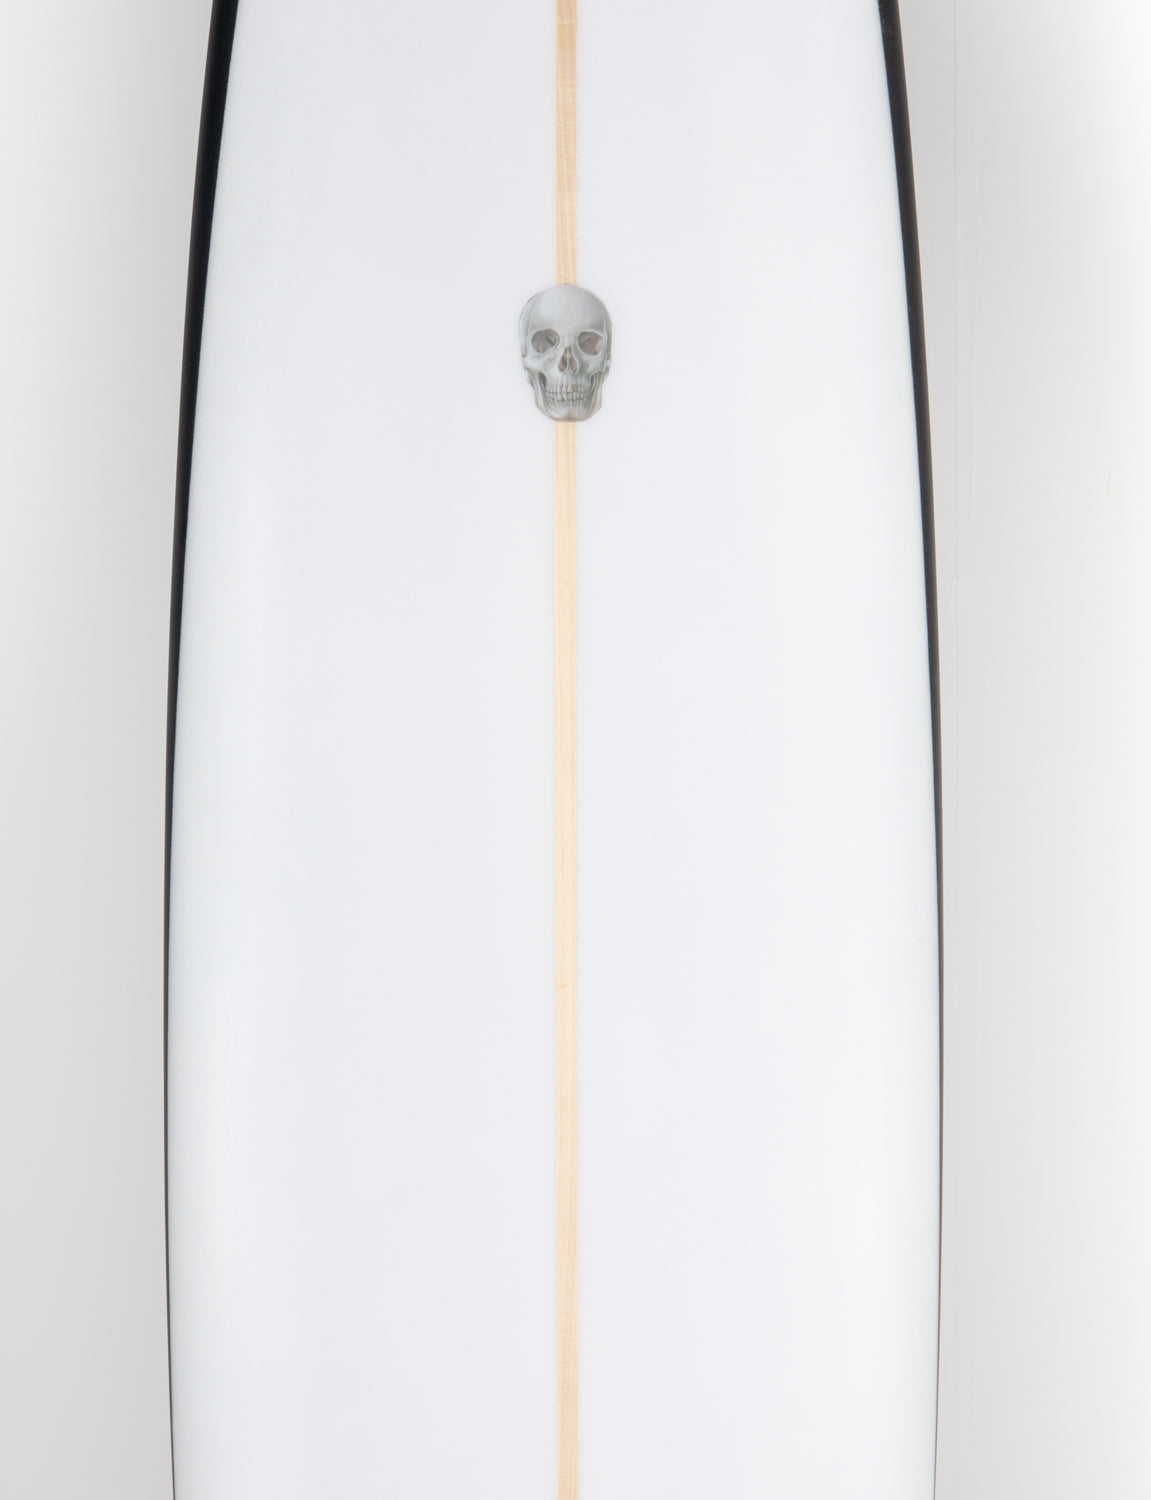 
                  
                    Pukas Surf Shop - Christenson Surfboards - CARRERA - 9'0" x 19 1/2 x 3 - 57,15L CX02180
                  
                